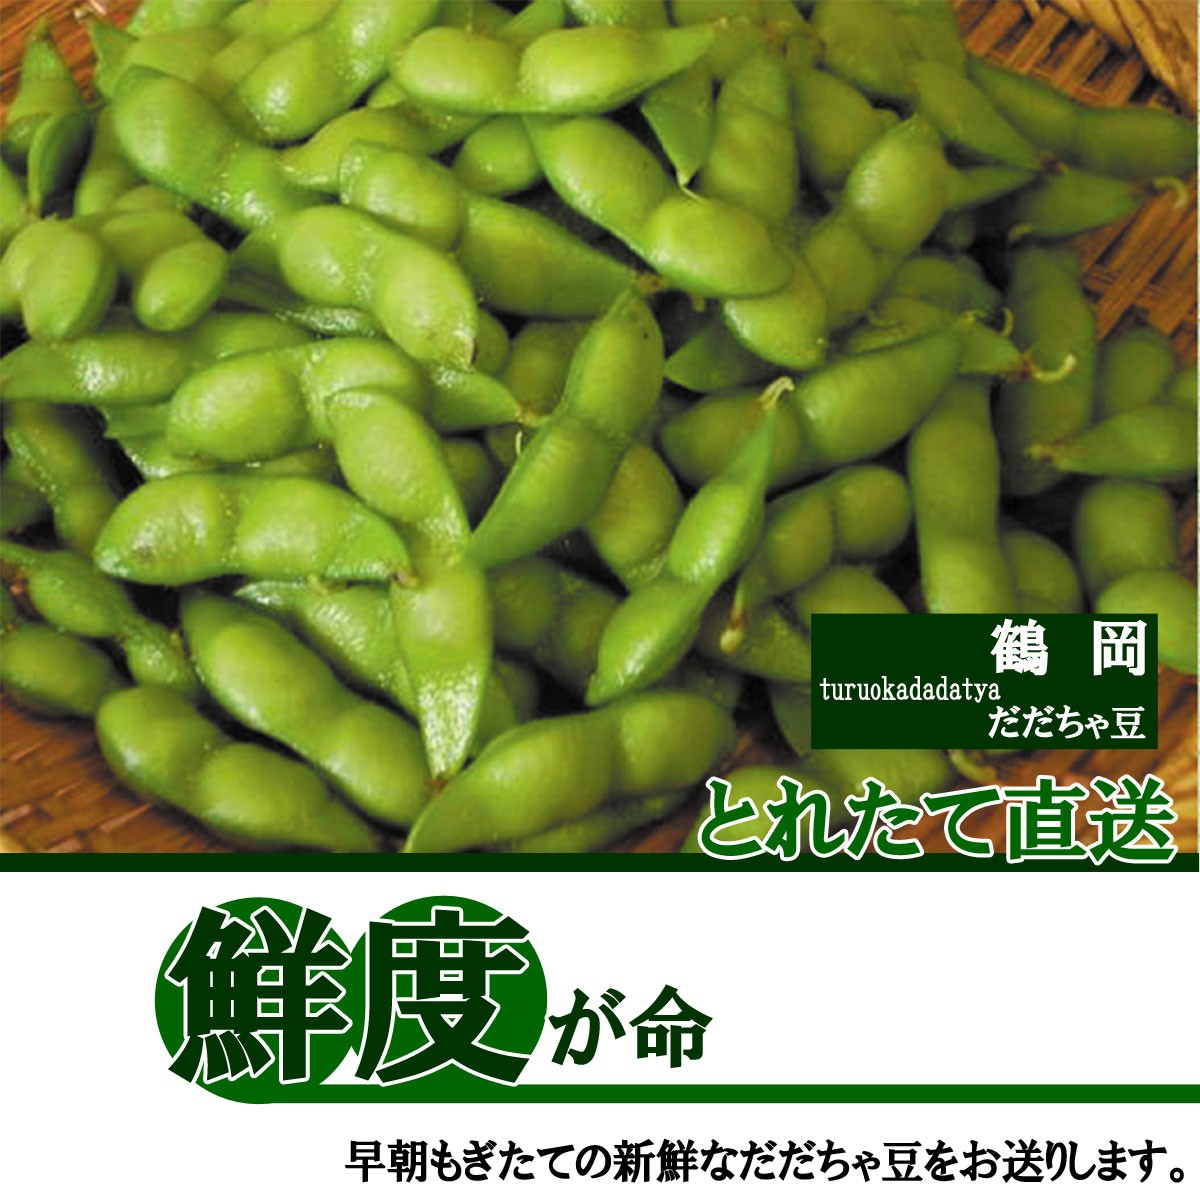  reservation free shipping branch legume. king Yamagata prefecture Tsuruoka city production Tsuruoka .... legume enough 1 kg hot . season . beer together taste *kok* fragrance ... exceedingly highest 